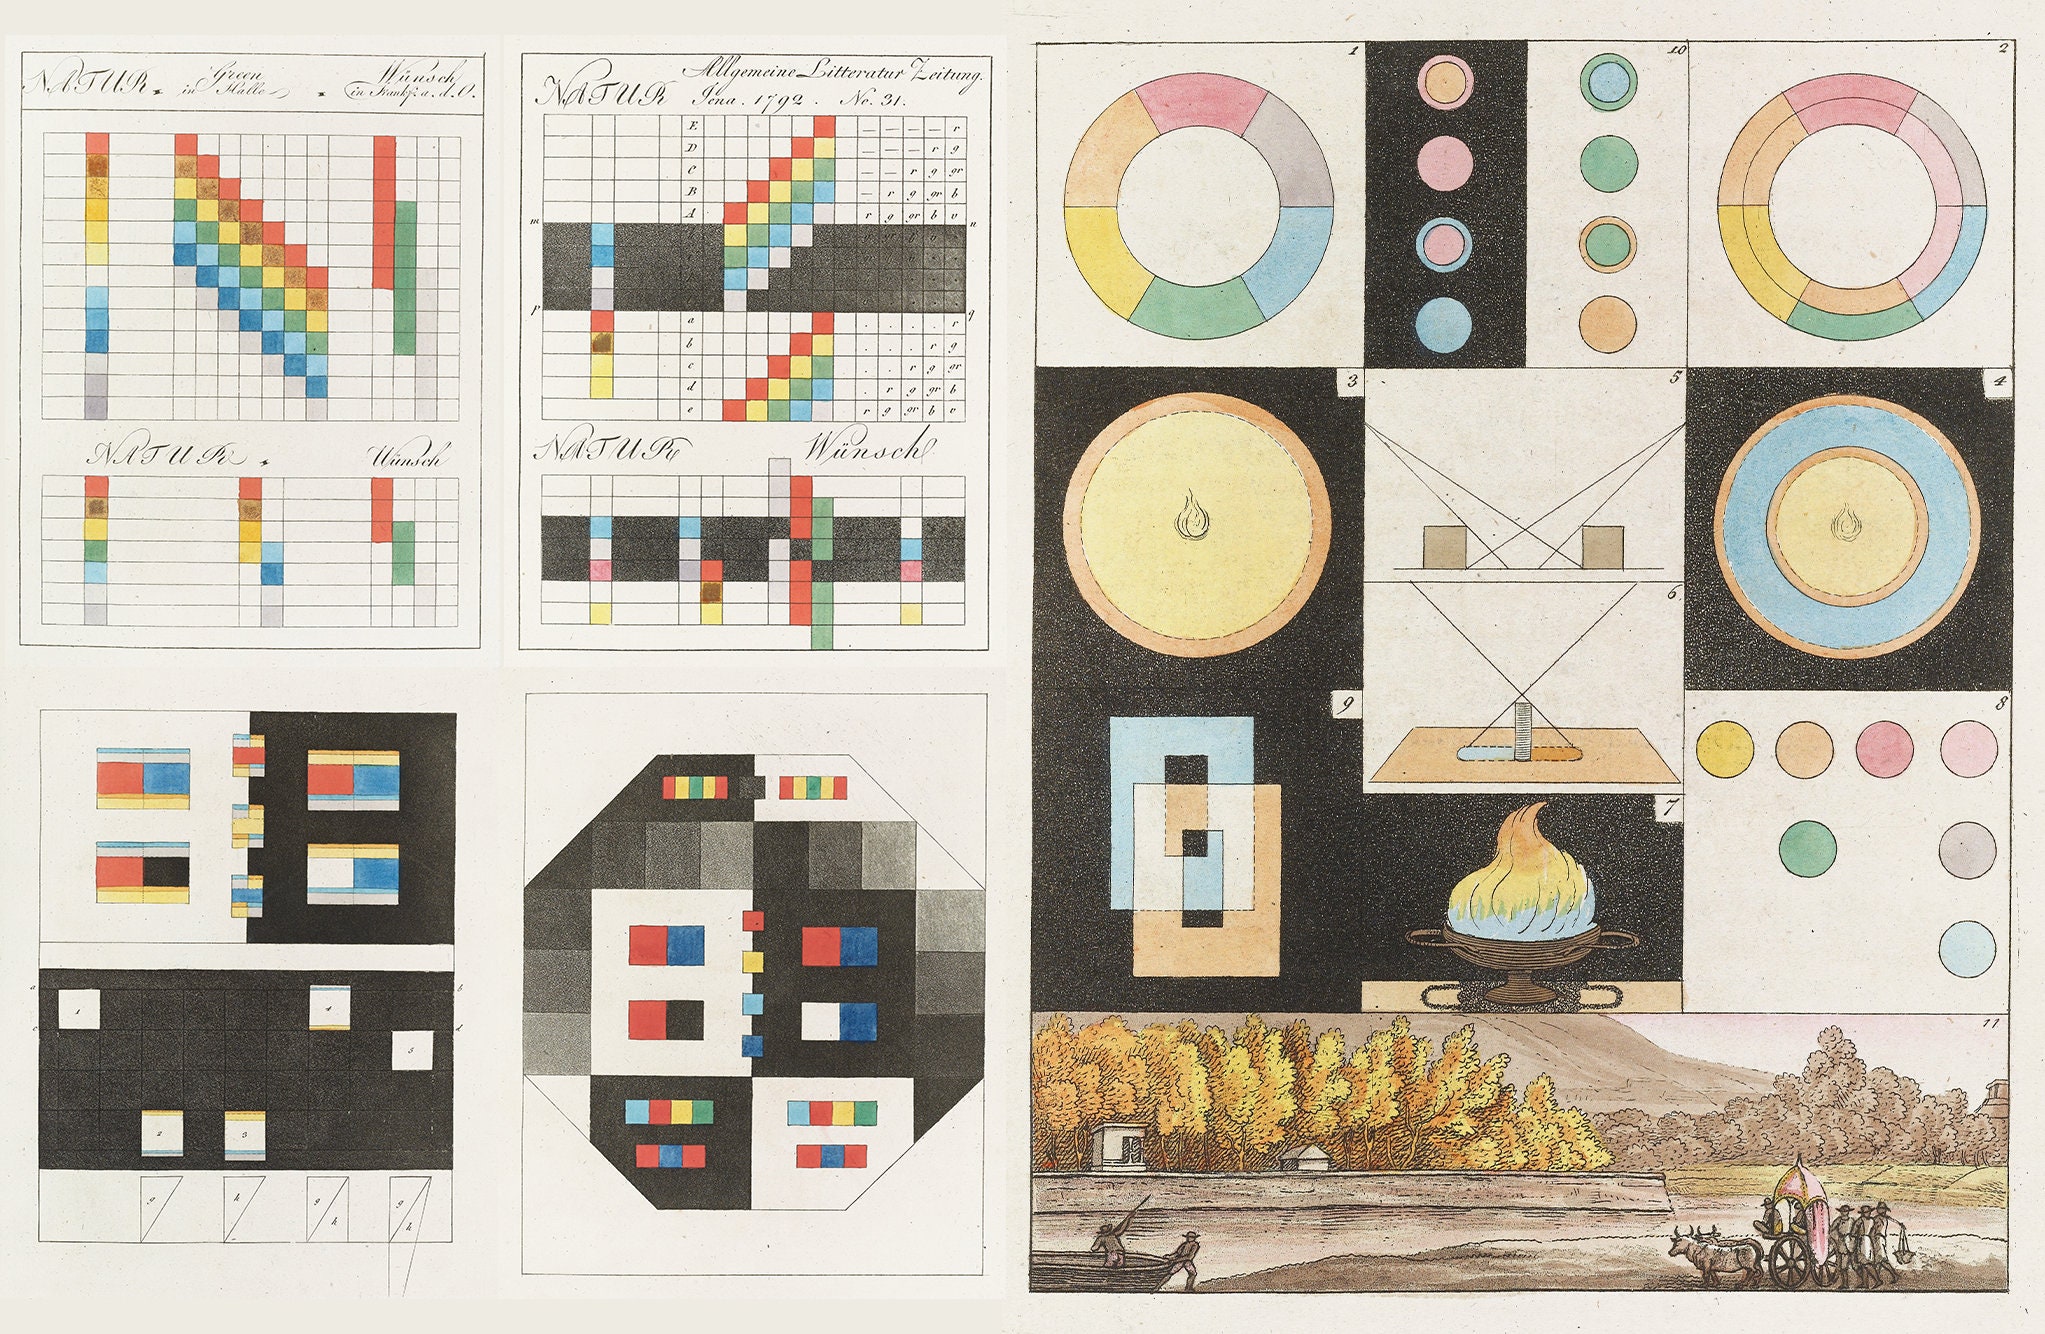 The Kestenberg Movement Profile Color Wheel Poster (11' x 17') - Payhip